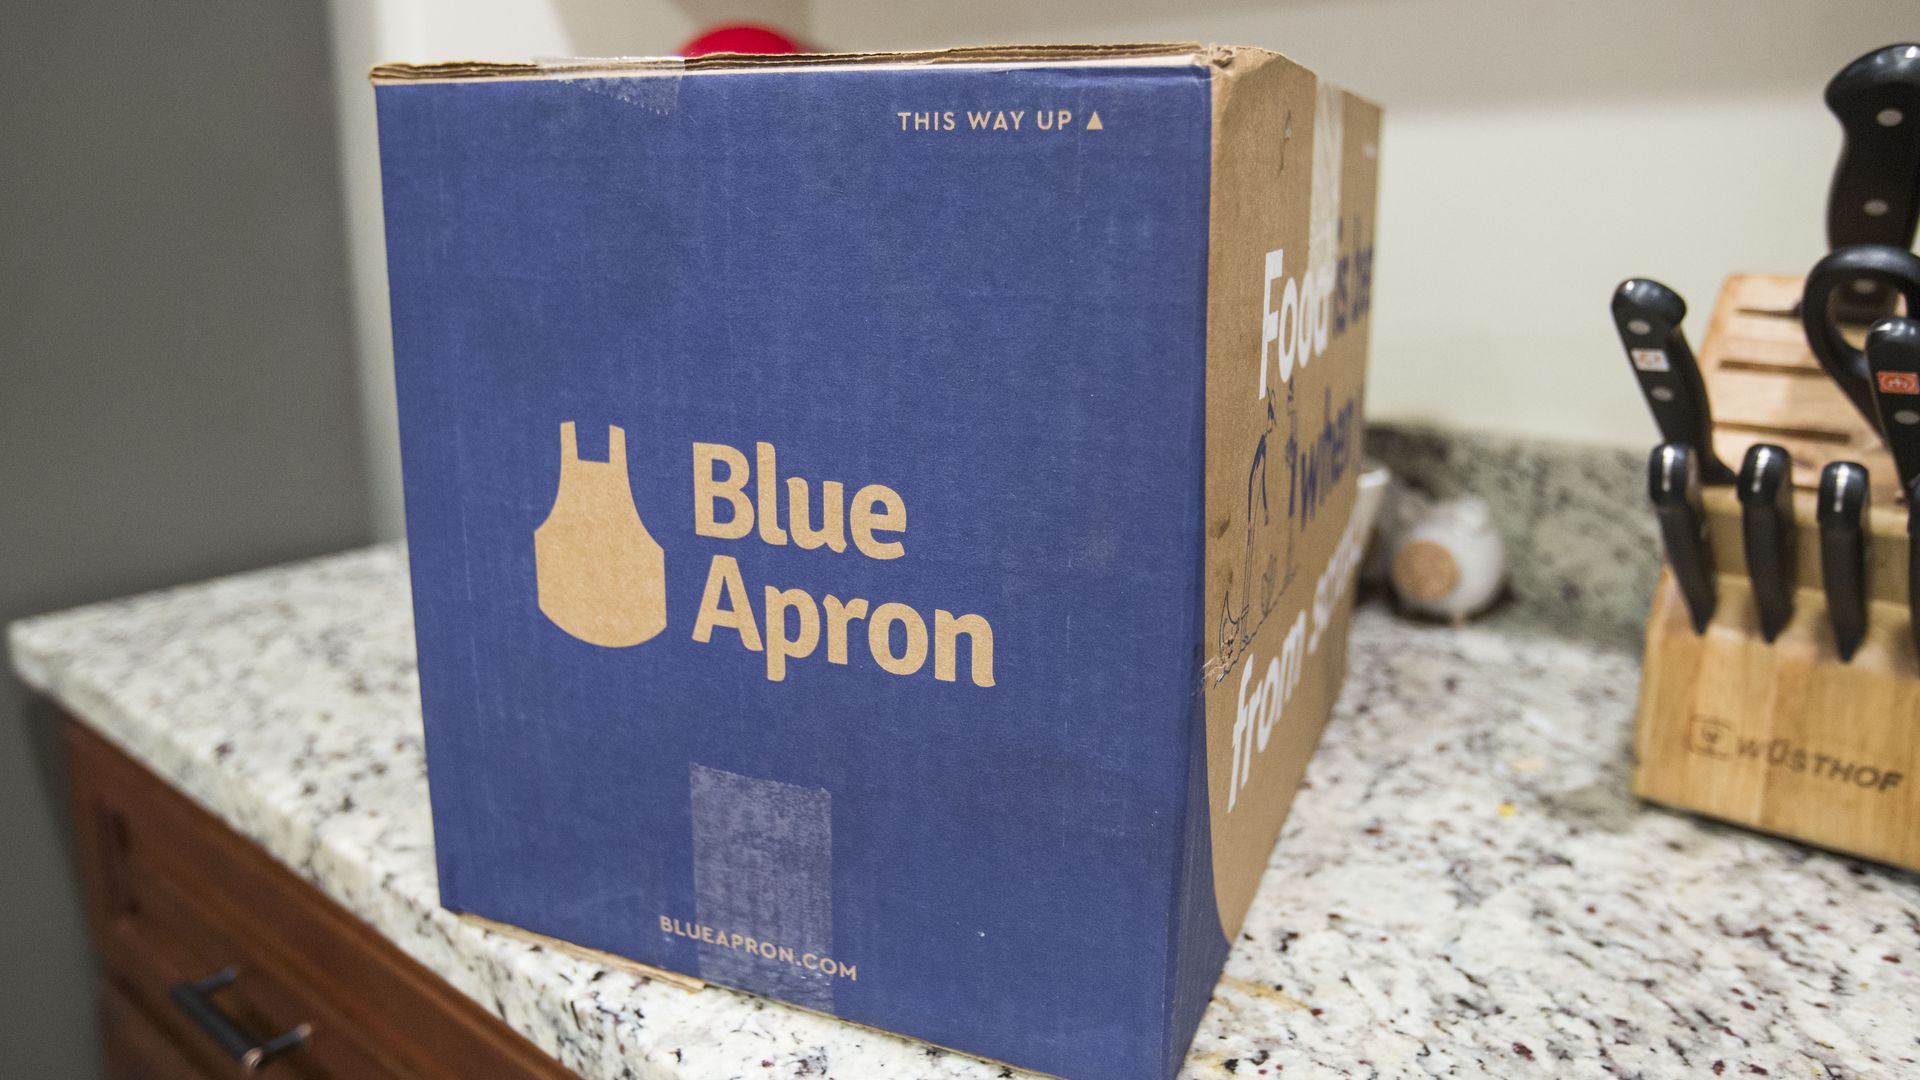 Blue apron box